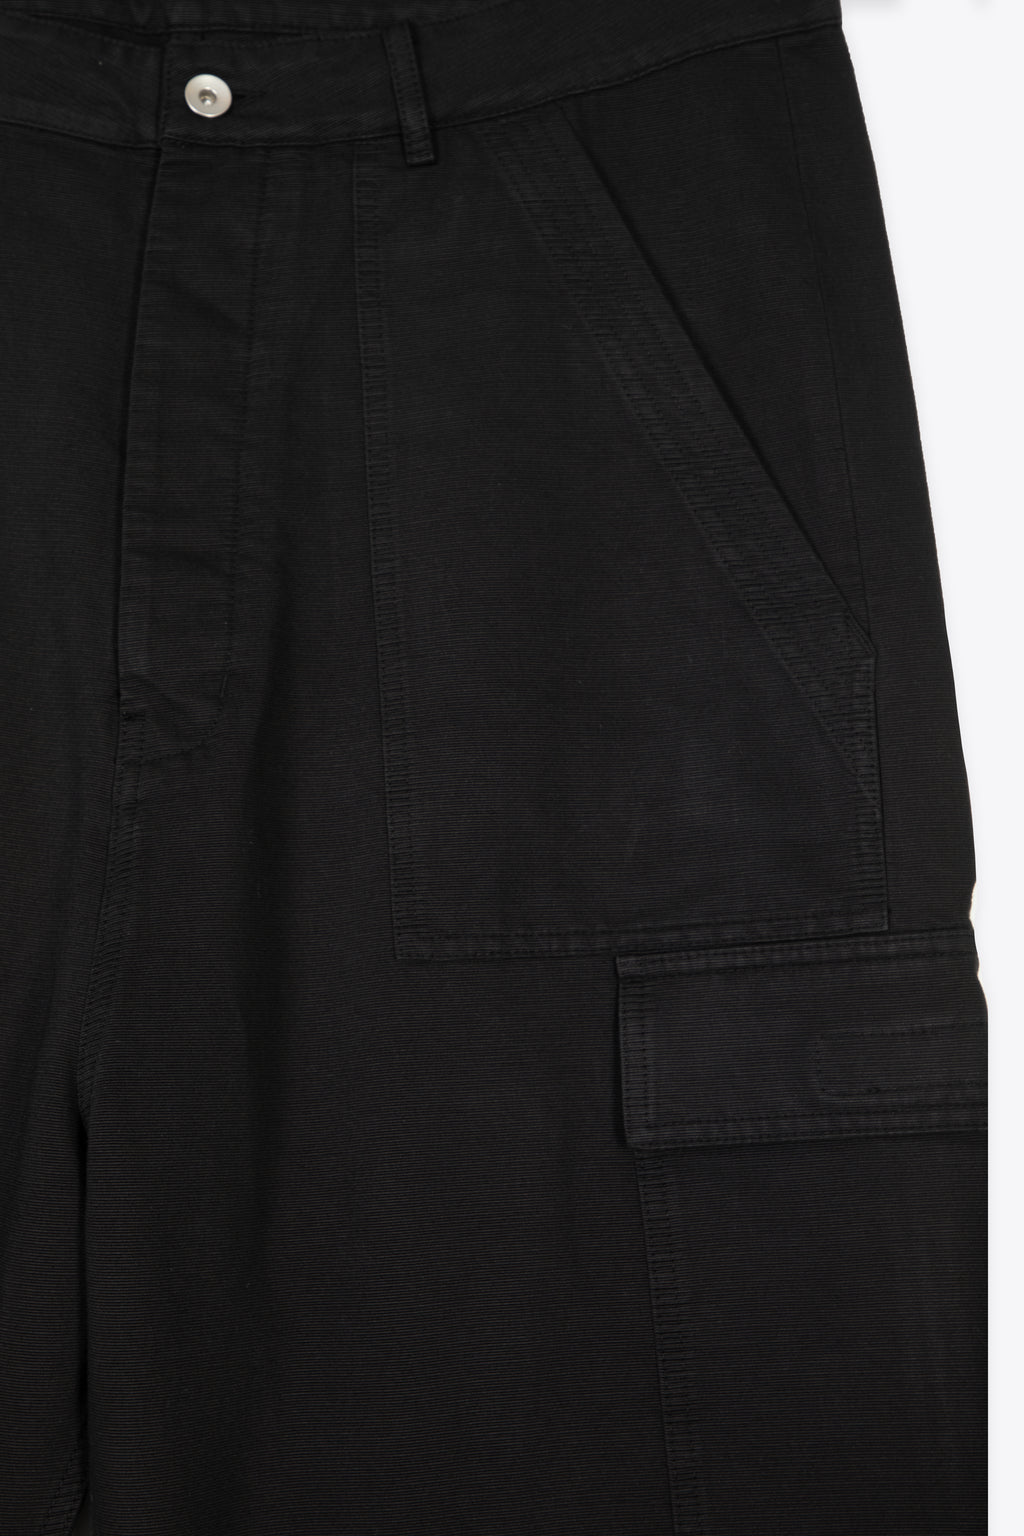 alt-image__Pantalone-cargo-nero-in-cotone---Cargo-trousers